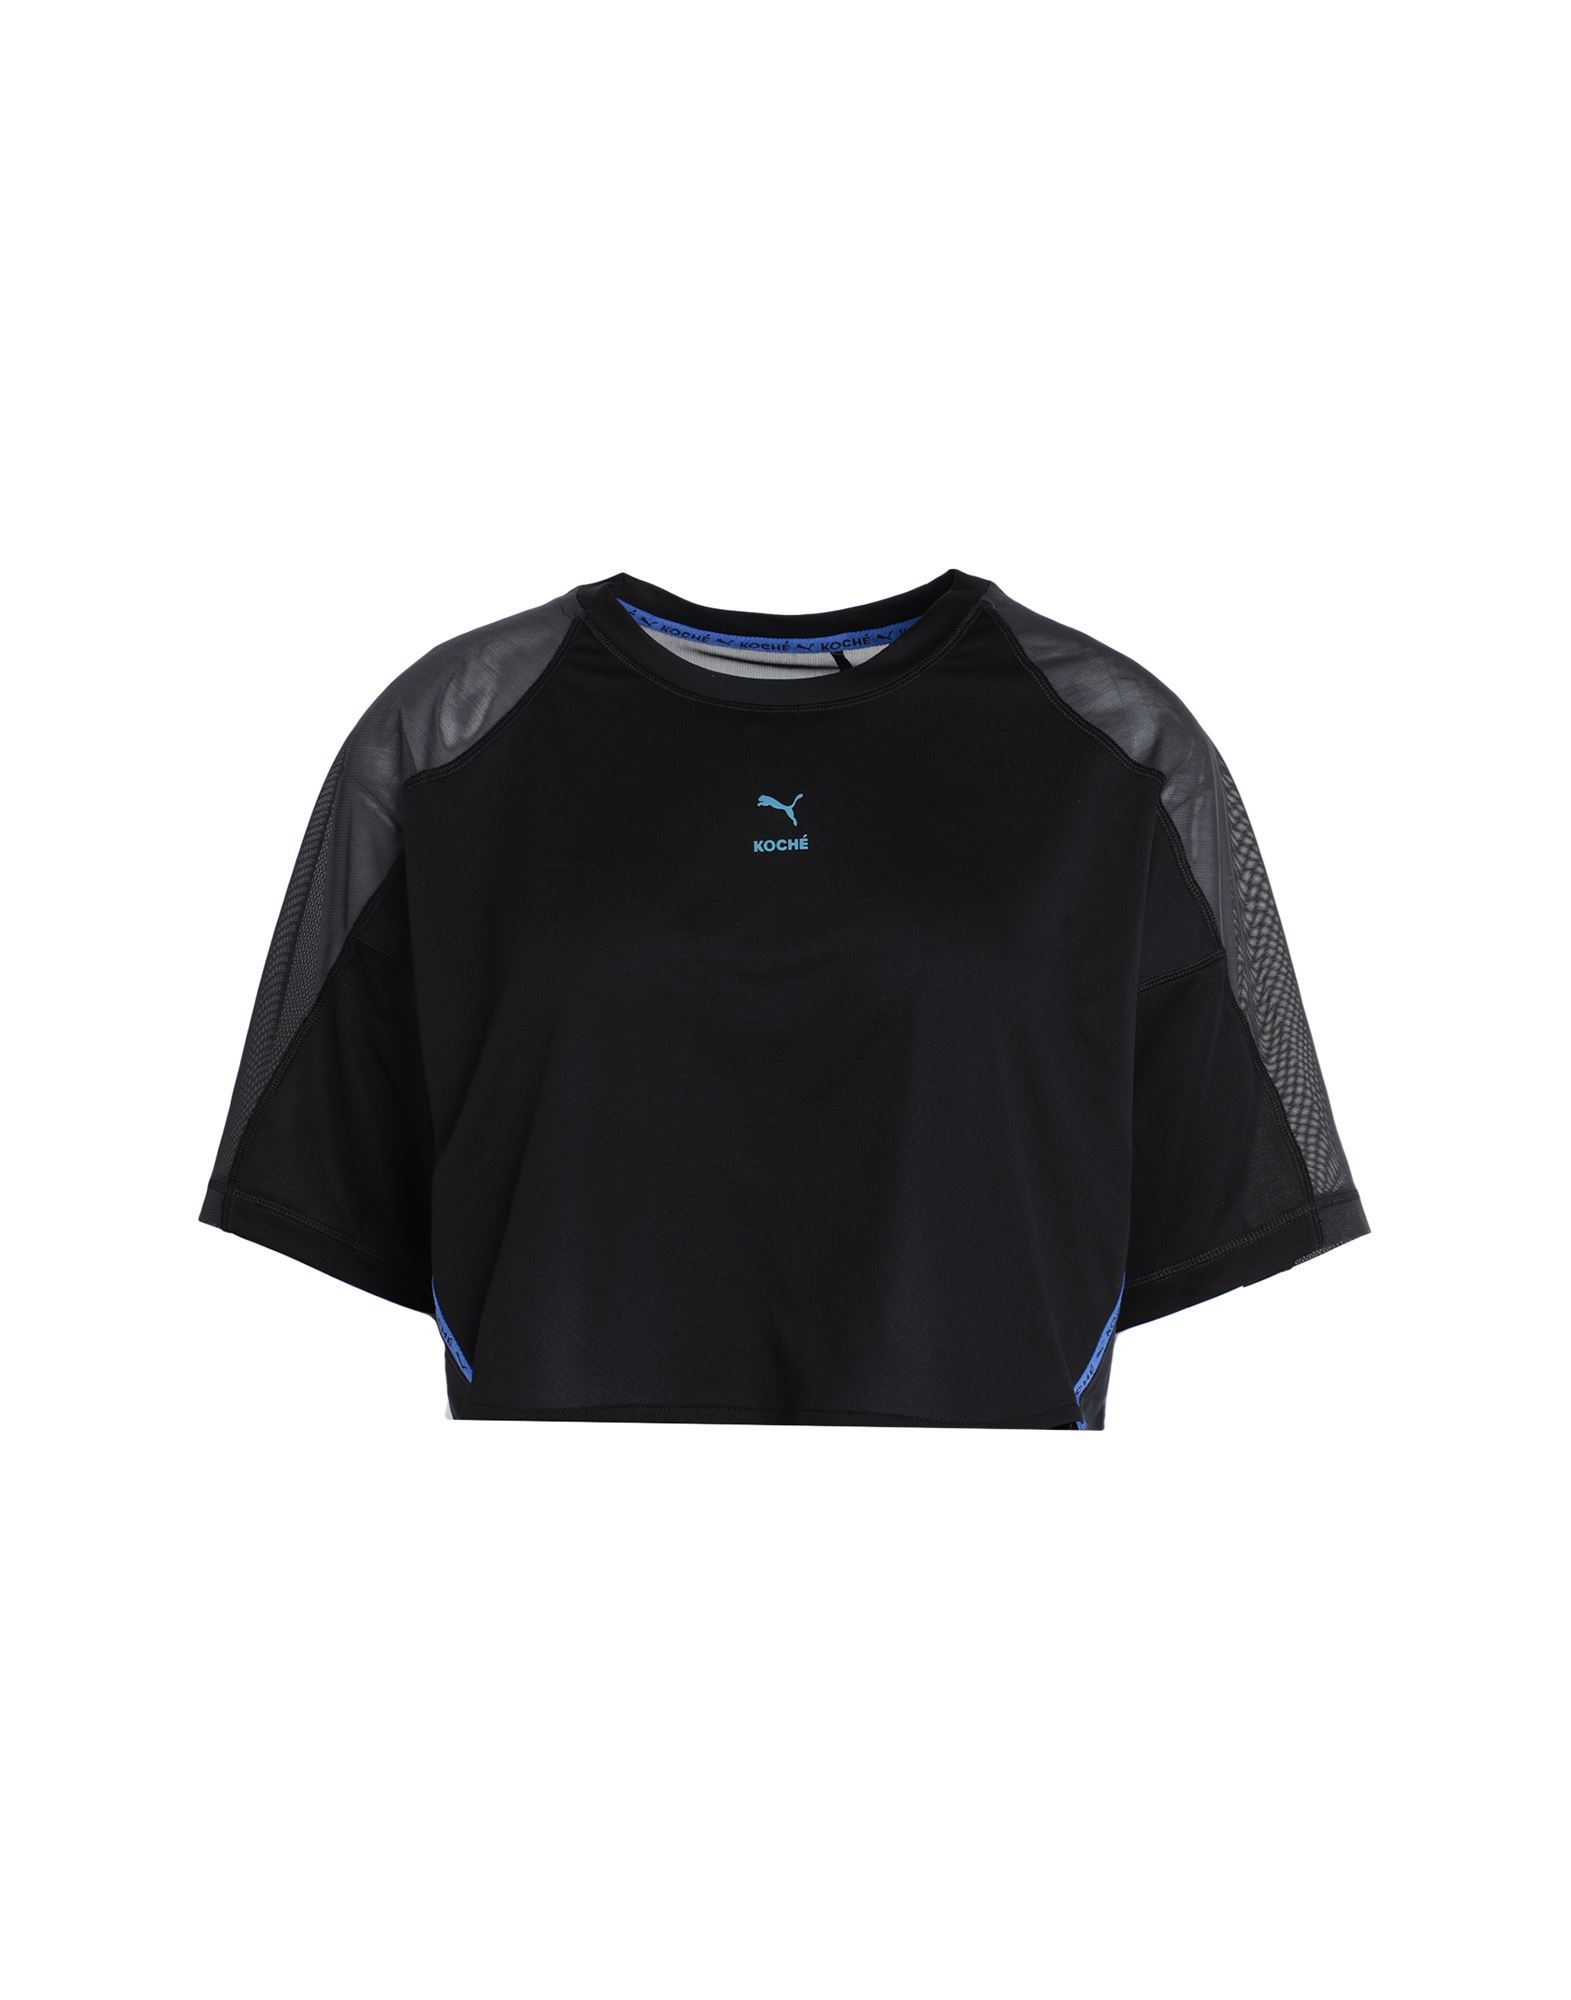 Puma X Koché Cropped Tee Woman T-shirt Black Size L Polyester